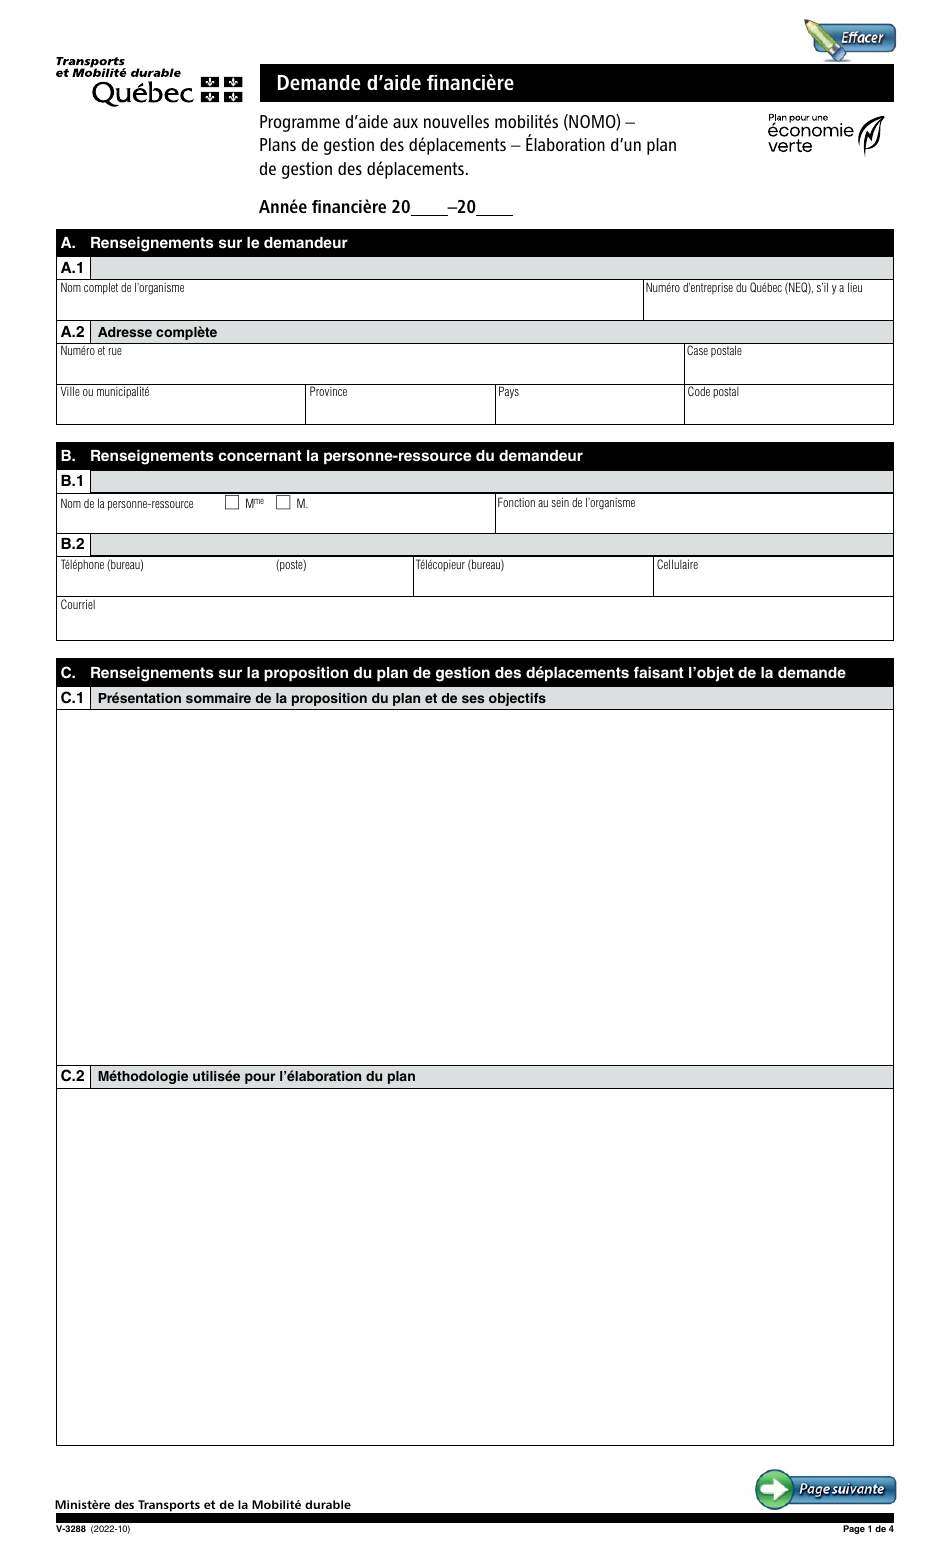 Forme V-3288 Demande Daide Financiere - Plans De Gestion DES Deplacements - Elaboration Dun Plan De Gestion DES Deplacements - Programme Daide Aux Nouvelles Mobilites (Nomo) - Quebec, Canada (French), Page 1